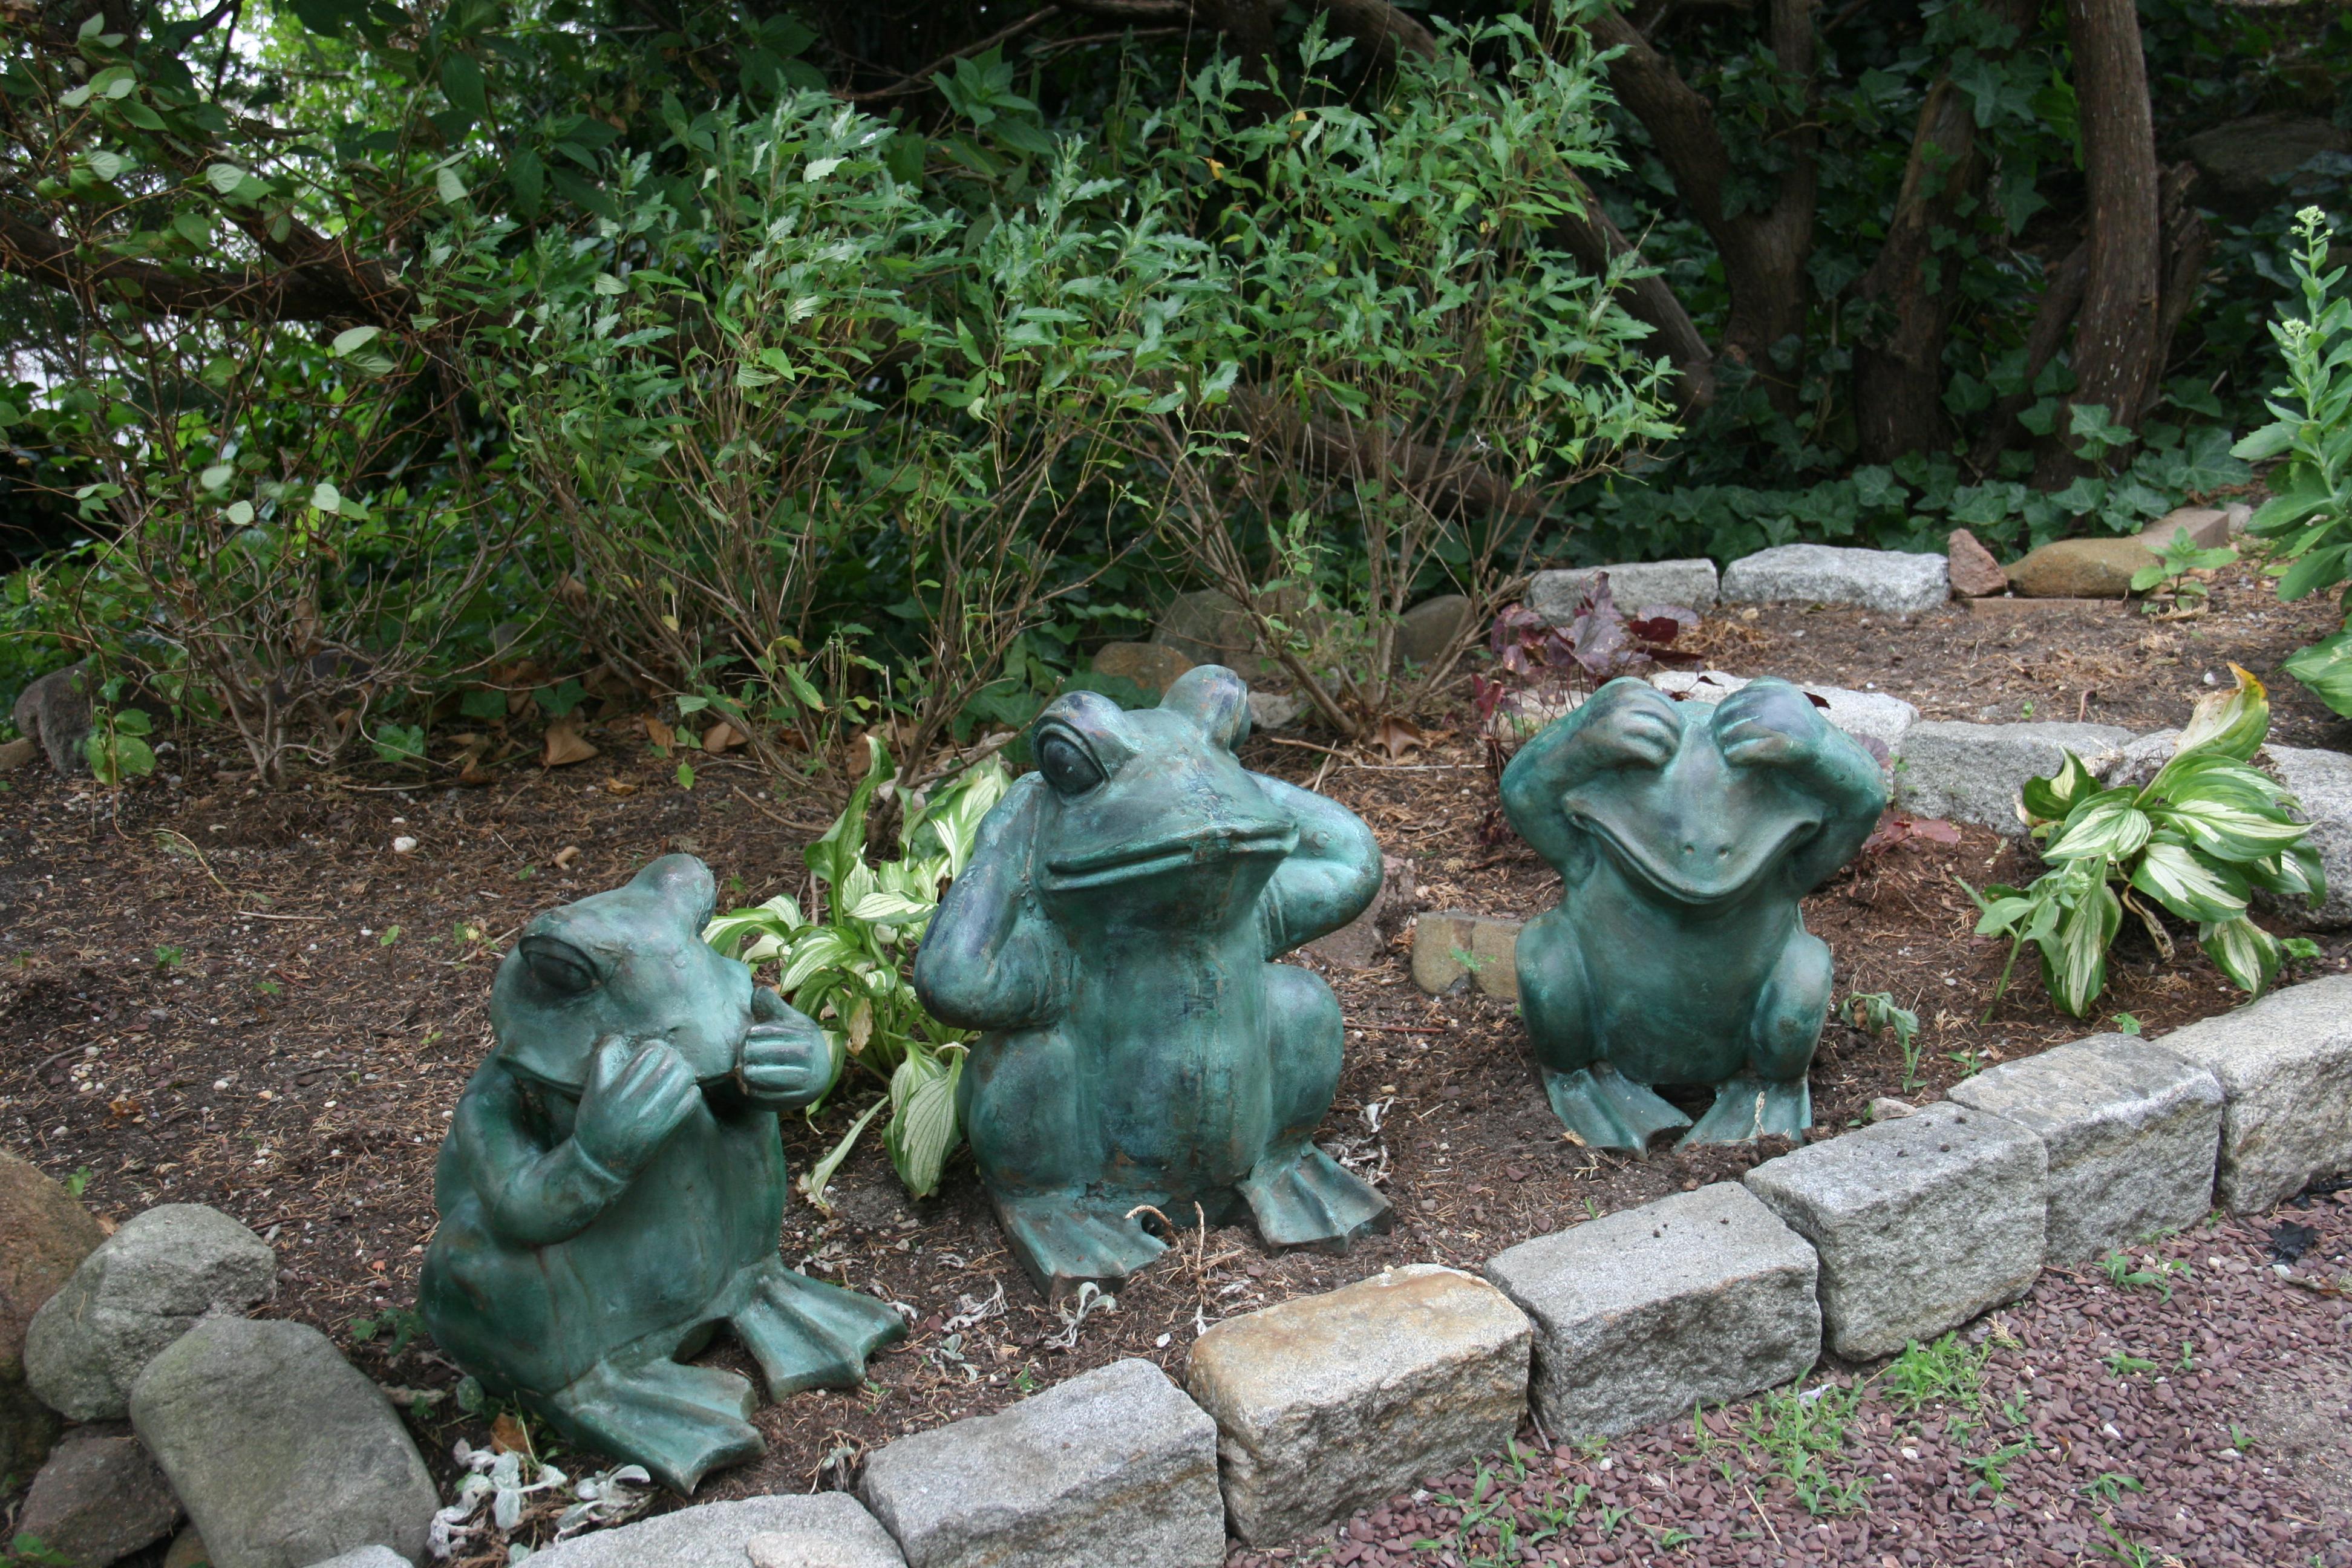 1243 Set of 3 oversized custom made cast iron frog garden sculptures 
Sizes
 Speak 12 x 12 x 16